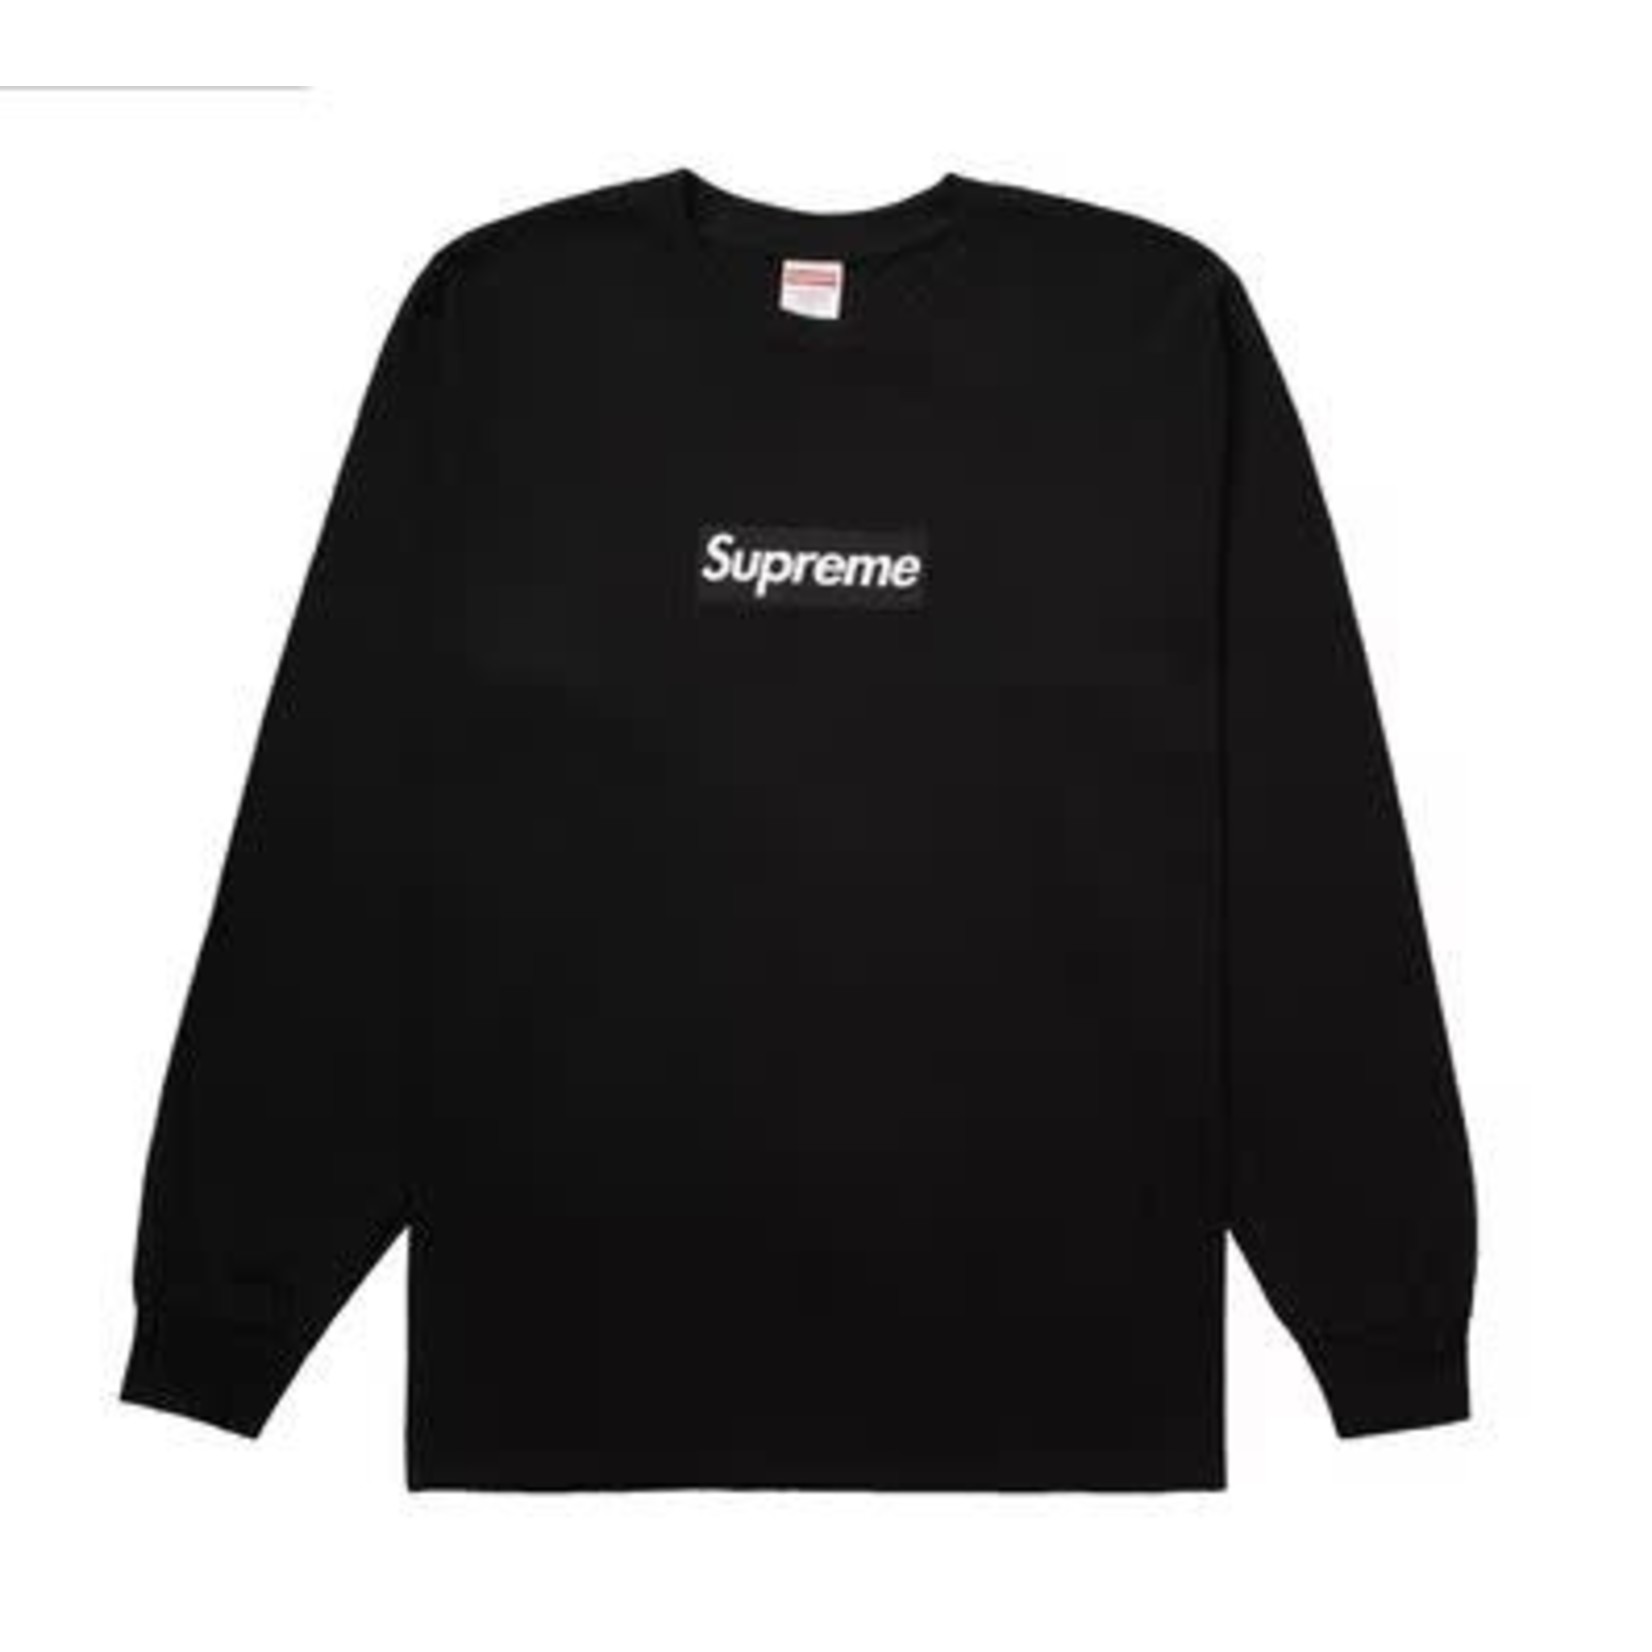 Supreme Supreme Box Logo Longsleeve Black Size Large, DS BRAND NEW